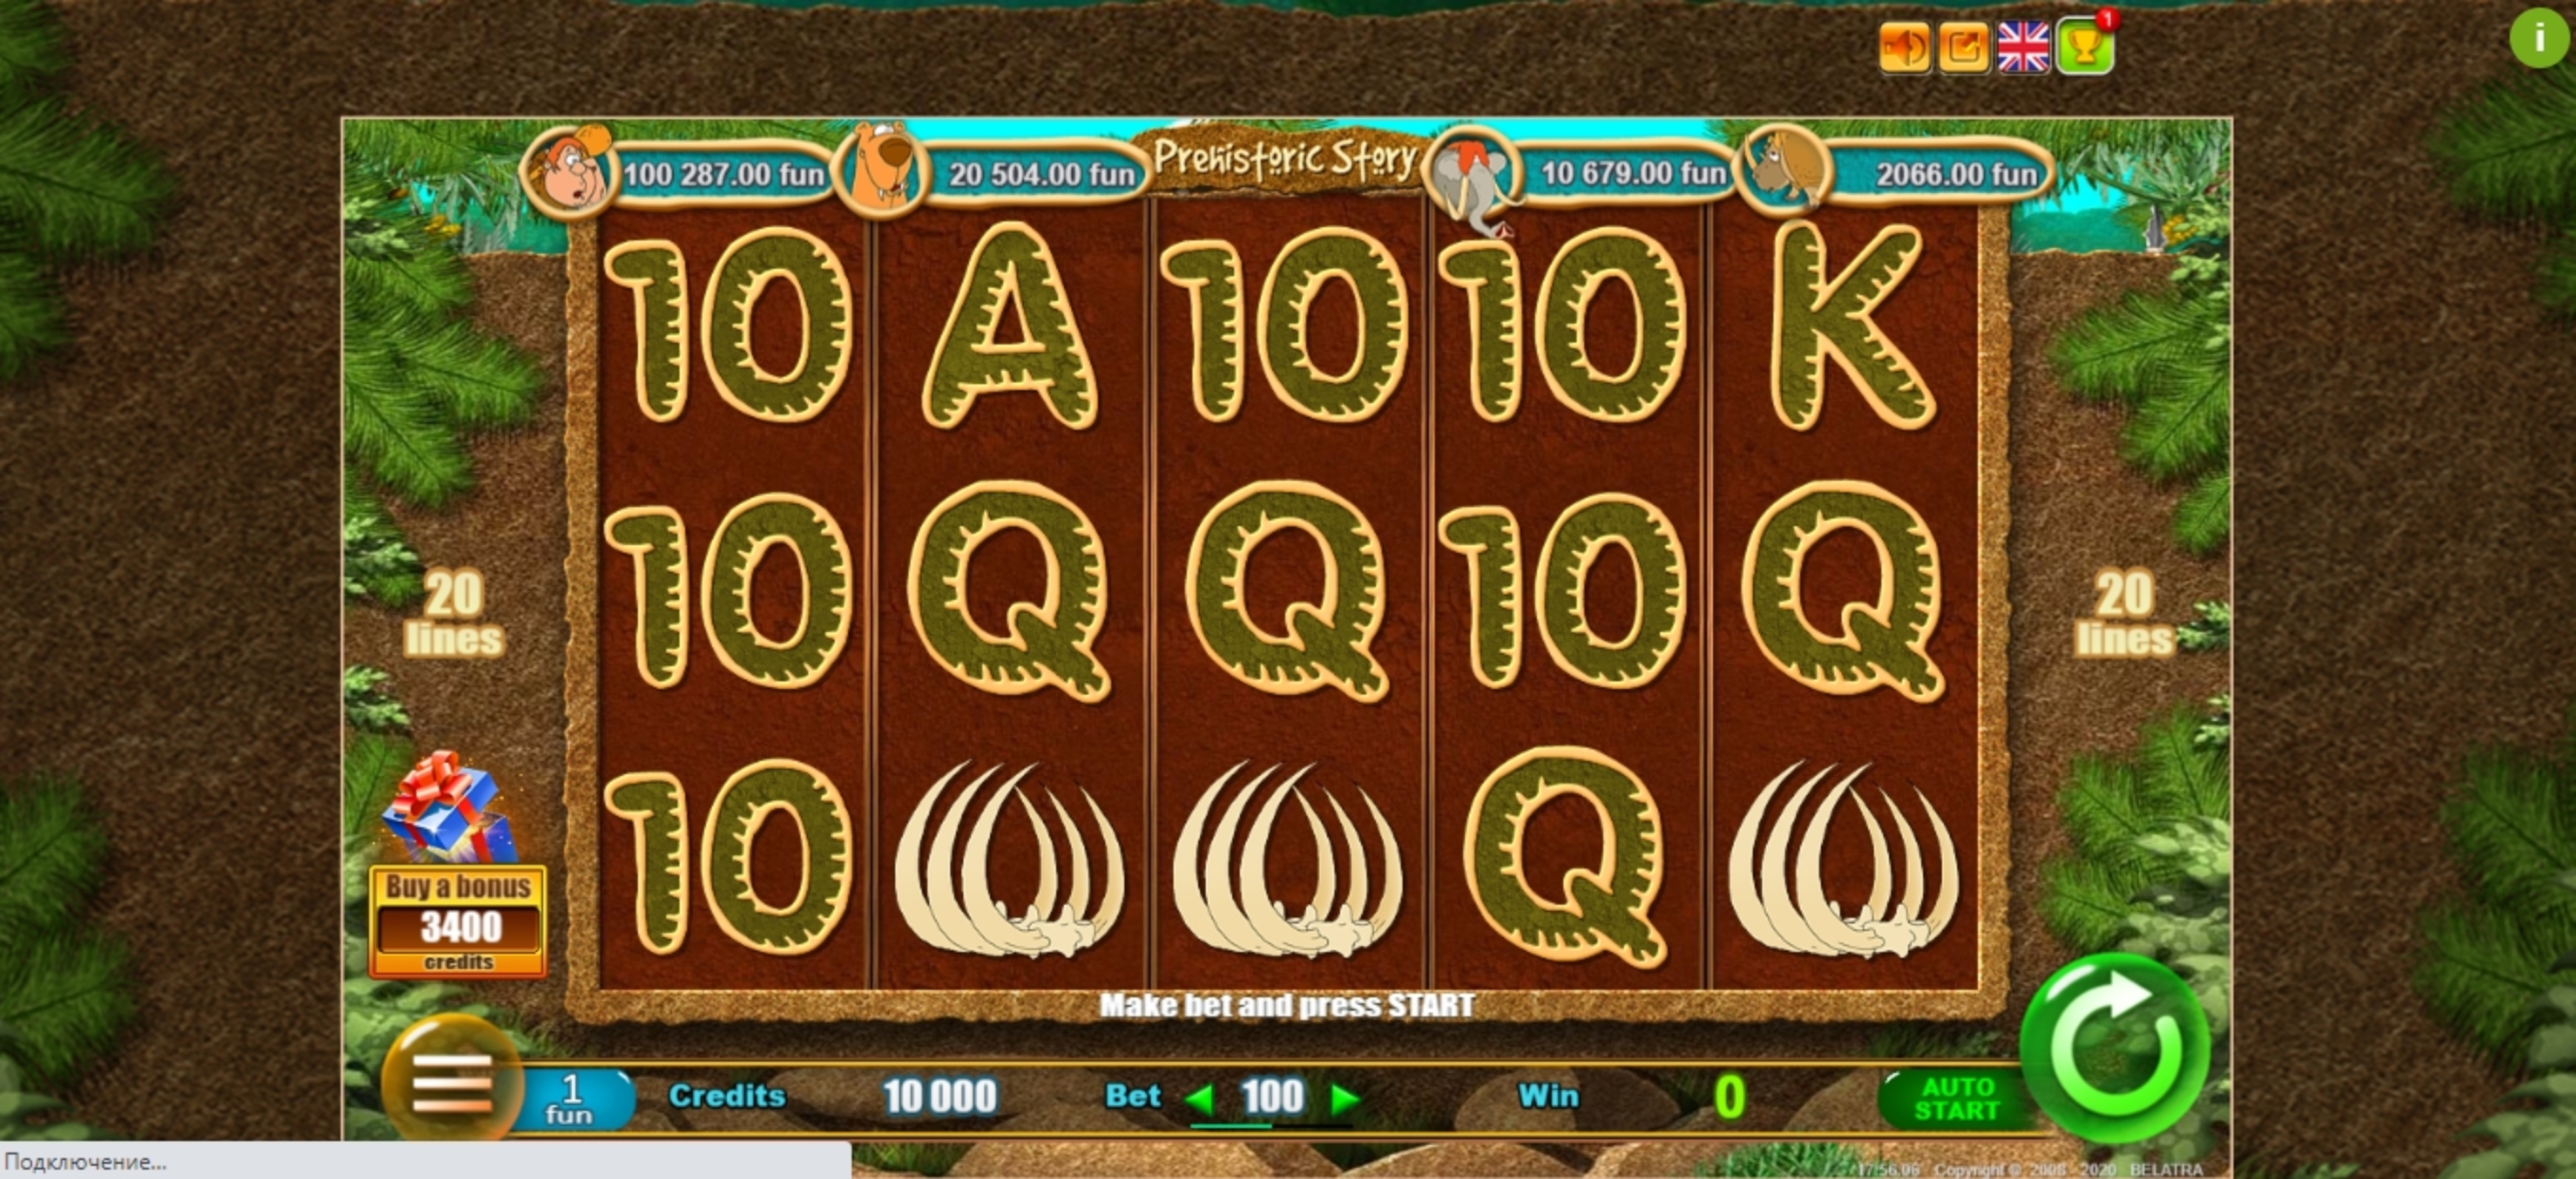 Reels in Prehistoric Story Slot Game by Belatra Games